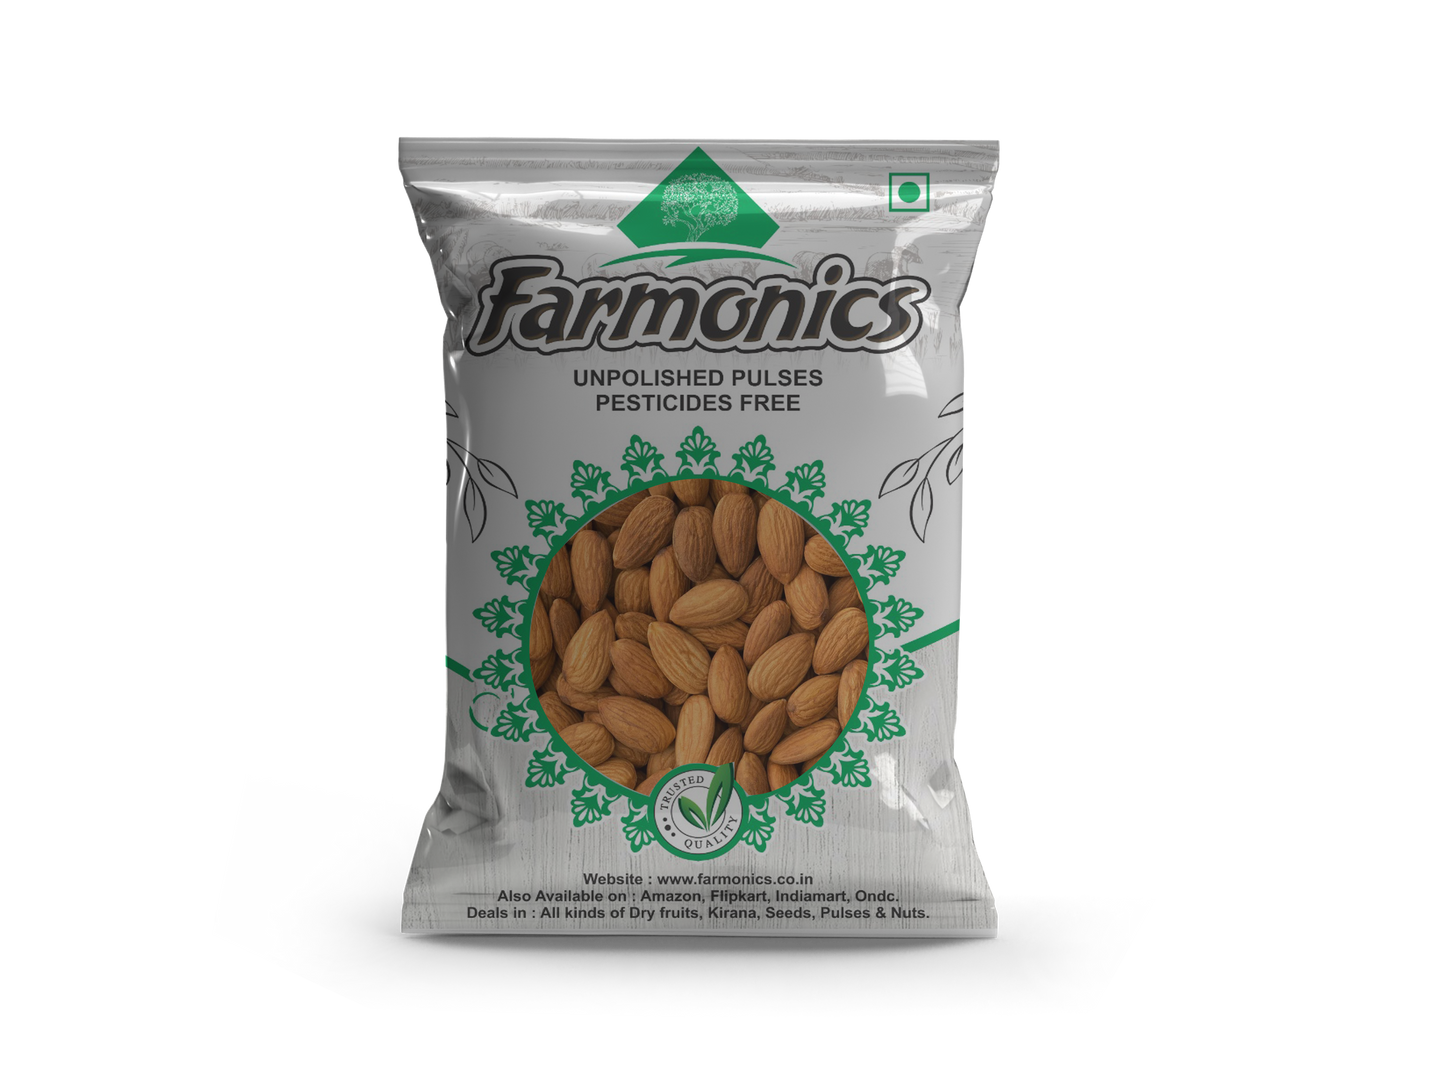 Premium quality california almonds from Farmonics 